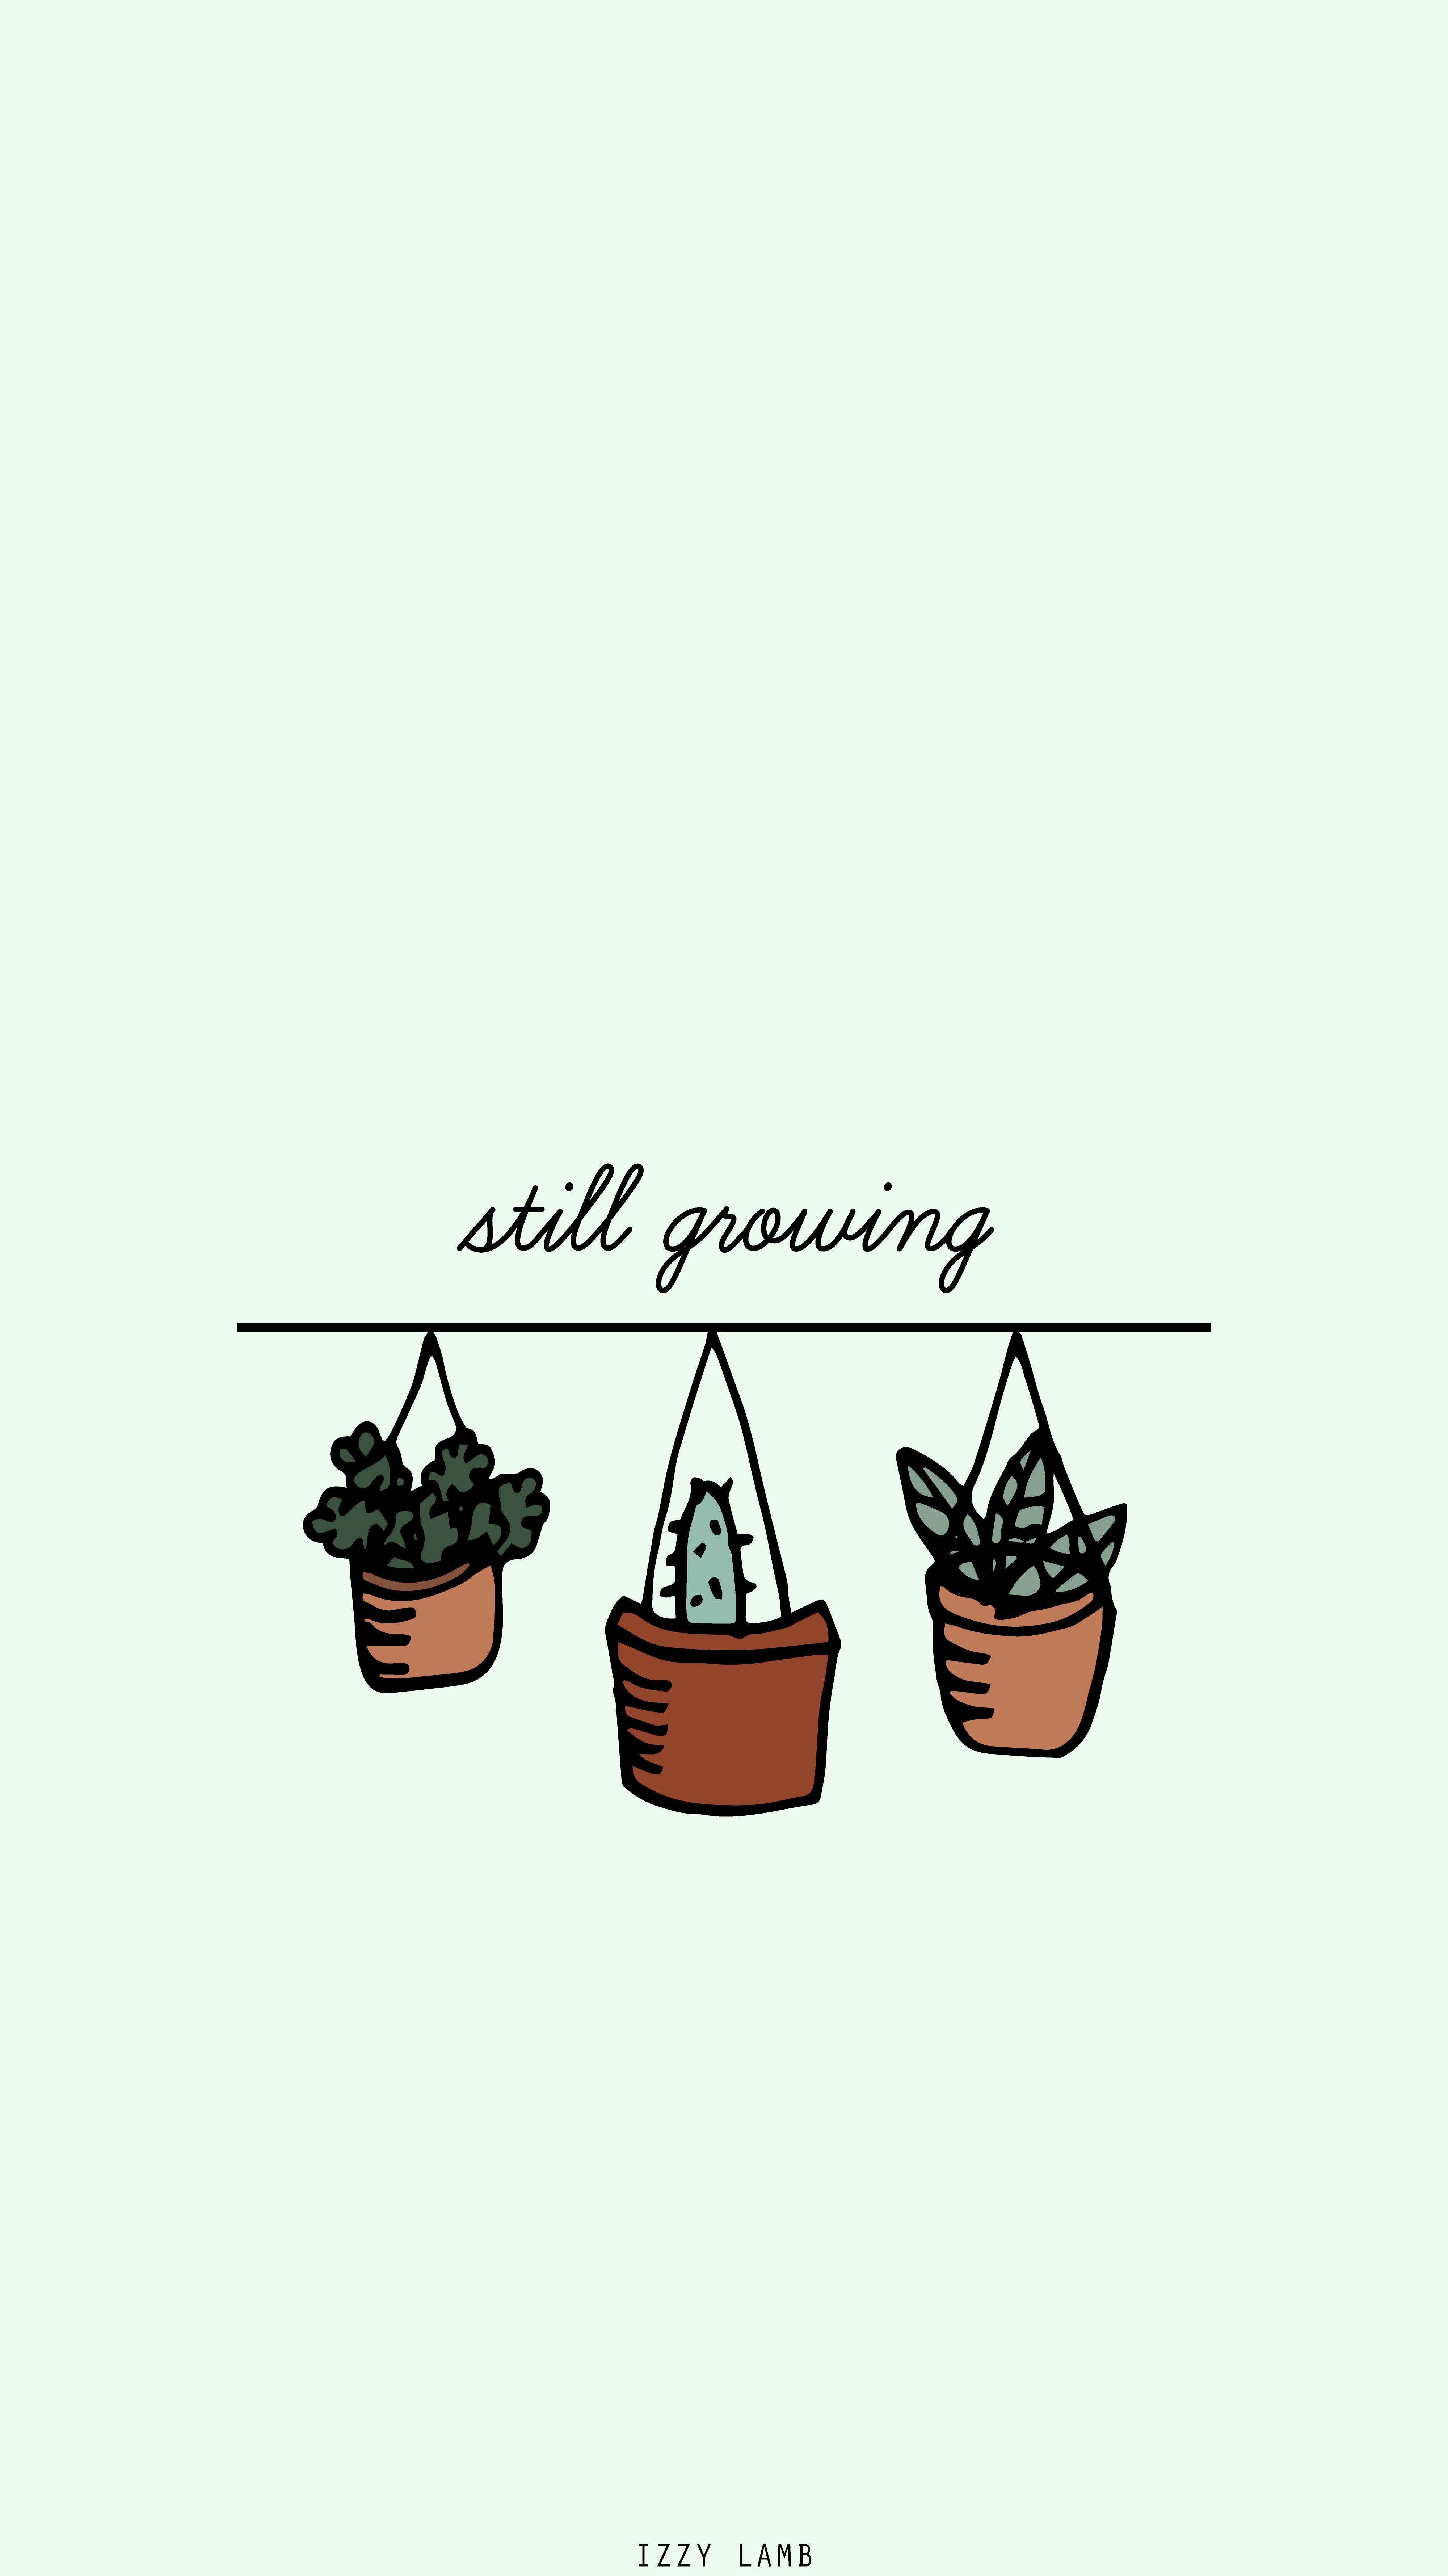 Grow still. Still growing. Time to grow обои на телефон.